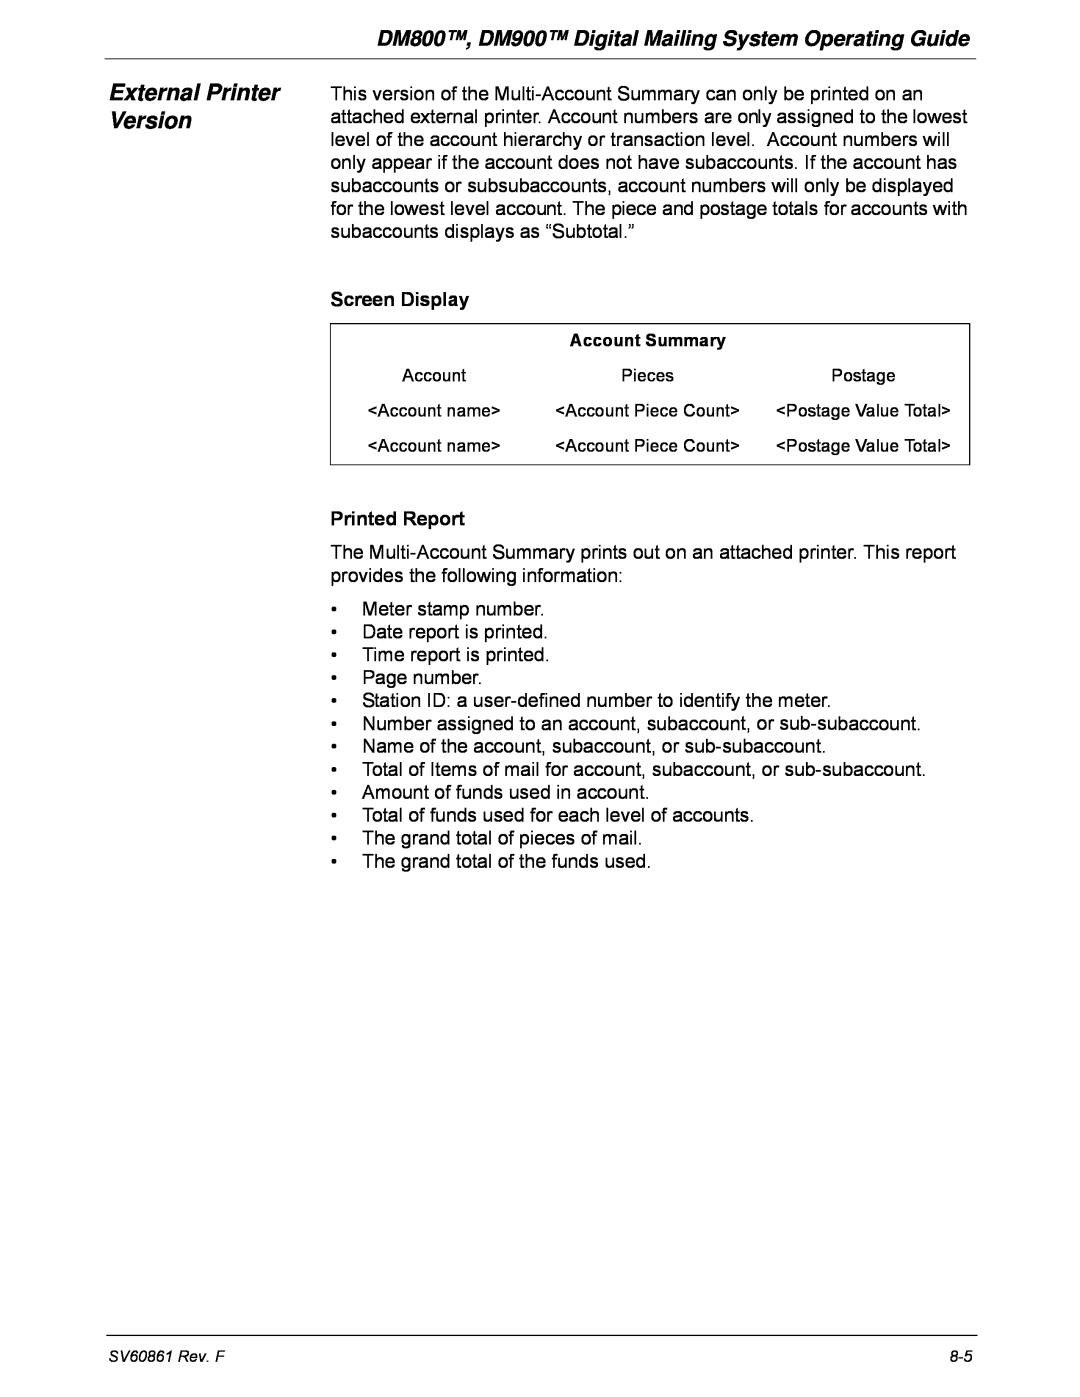 Pitney Bowes manual External Printer Version, DM800, DM900 Digital Mailing System Operating Guide, Screen Display 